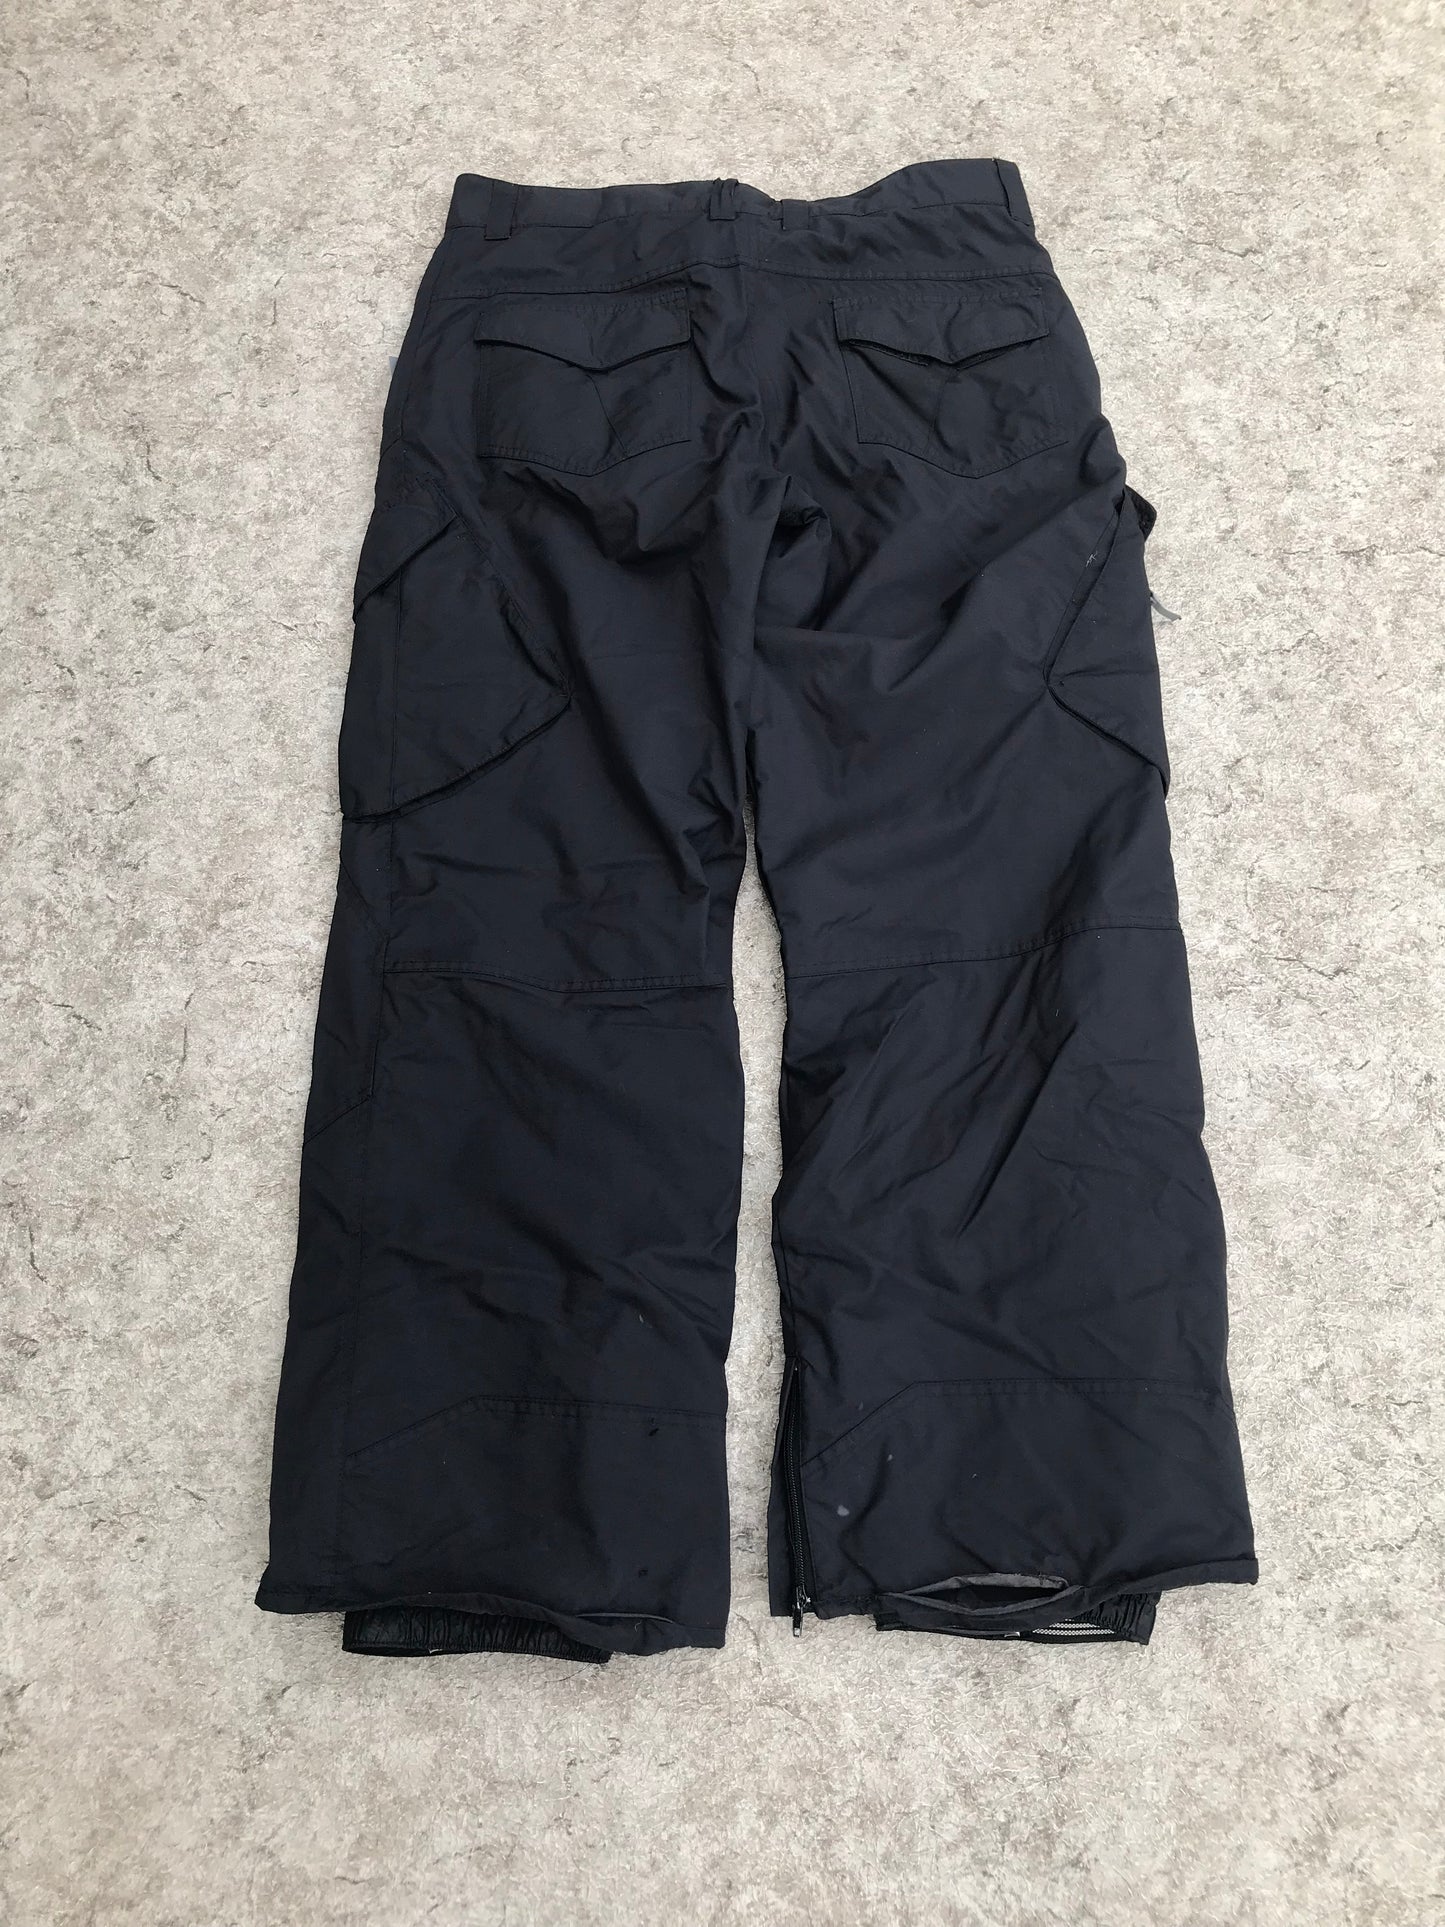 Snow Pants Men's Size Large Ripzone Black Snowboarding Minor Wear